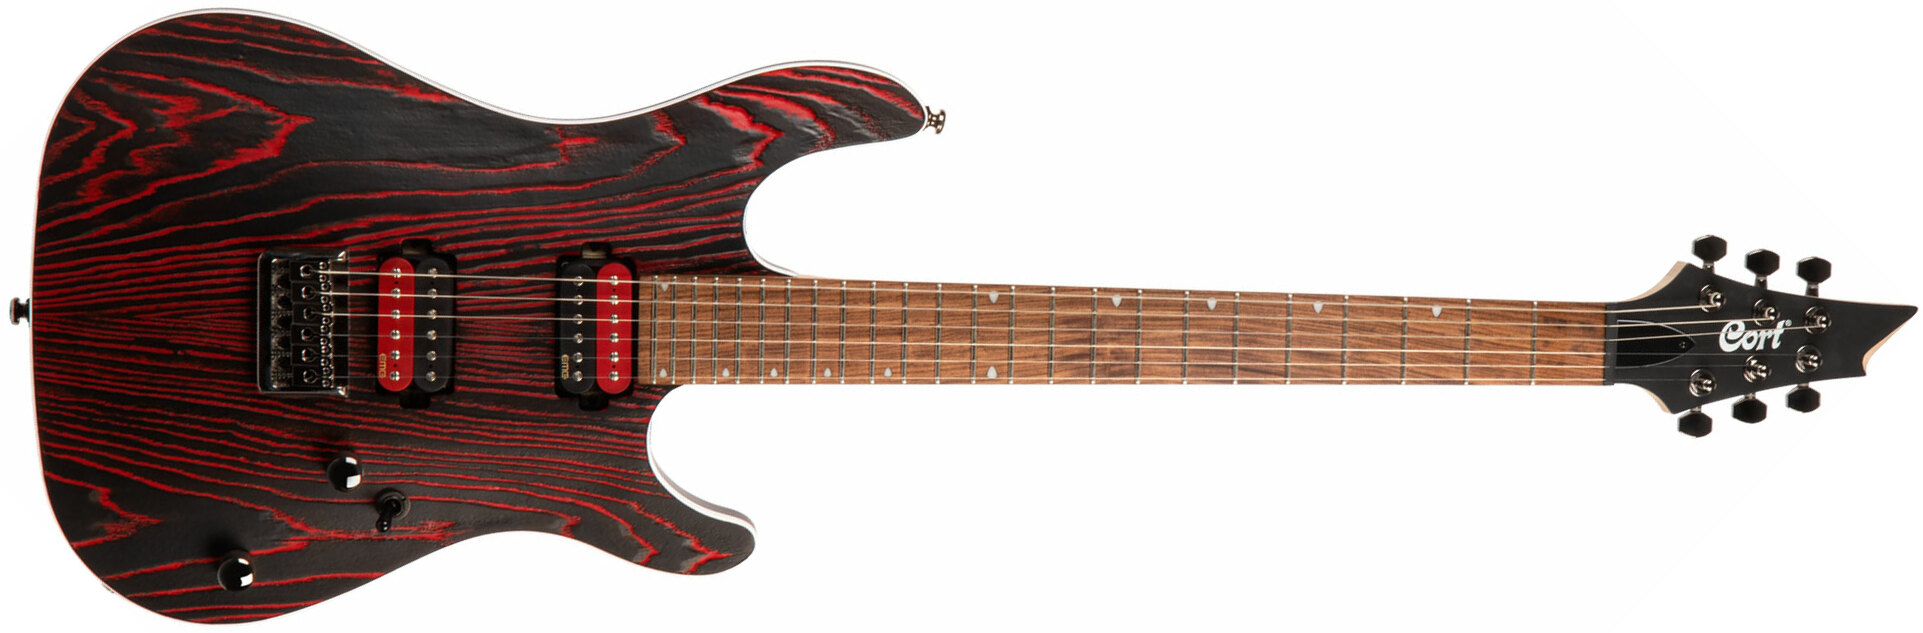 Cort Kx300 Ebr Hh Emg Ht Jat - Etched Black Red - E-Gitarre in Str-Form - Main picture